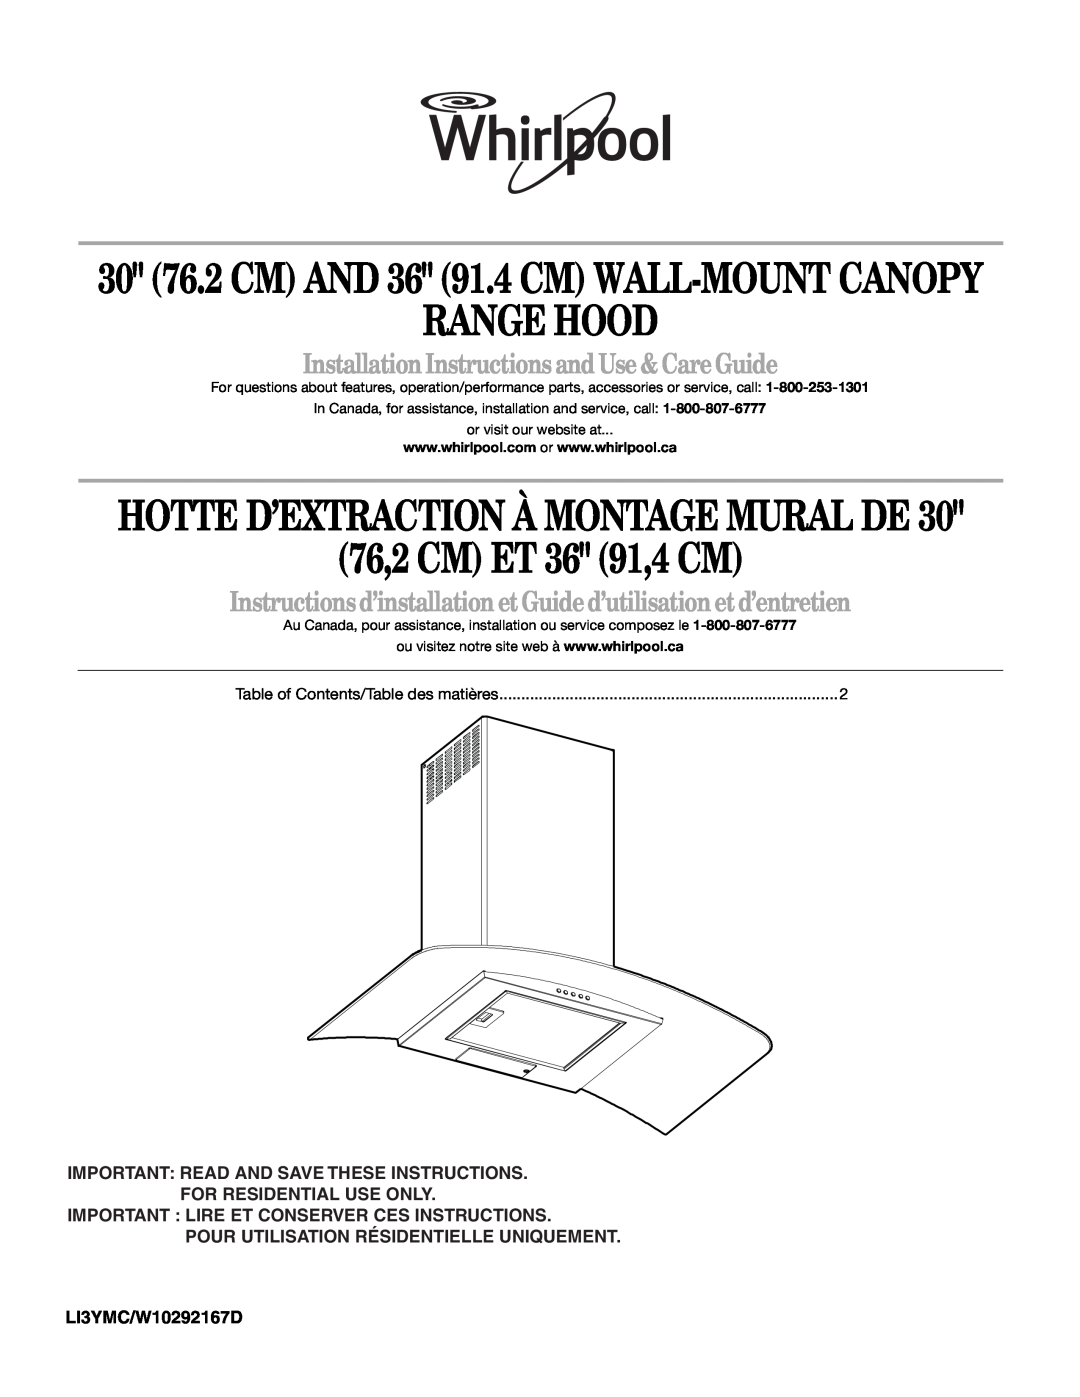 Whirlpool installation instructions 30 76.2 CM AND 36 91.4 CM WALL-MOUNT CANOPY, Range Hood, LI3YMC/W10292167D 